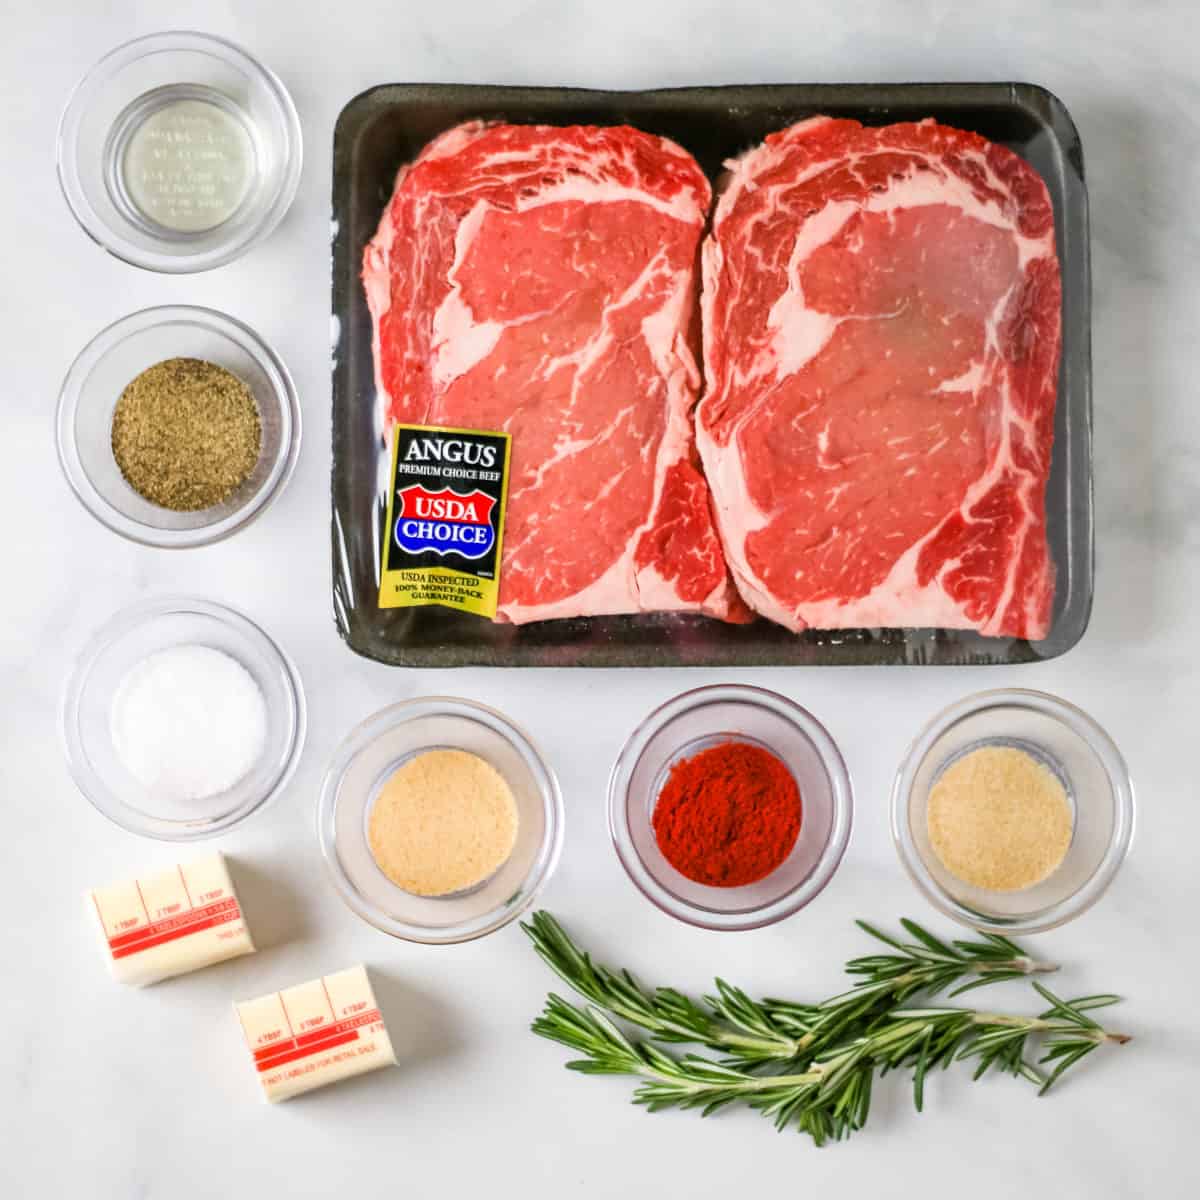 Ingredients for pan seared steak: ribeye steak, black pepper, salt, paprika, garlic powder, onion powder, canola oil, butter, and fresh rosemary.